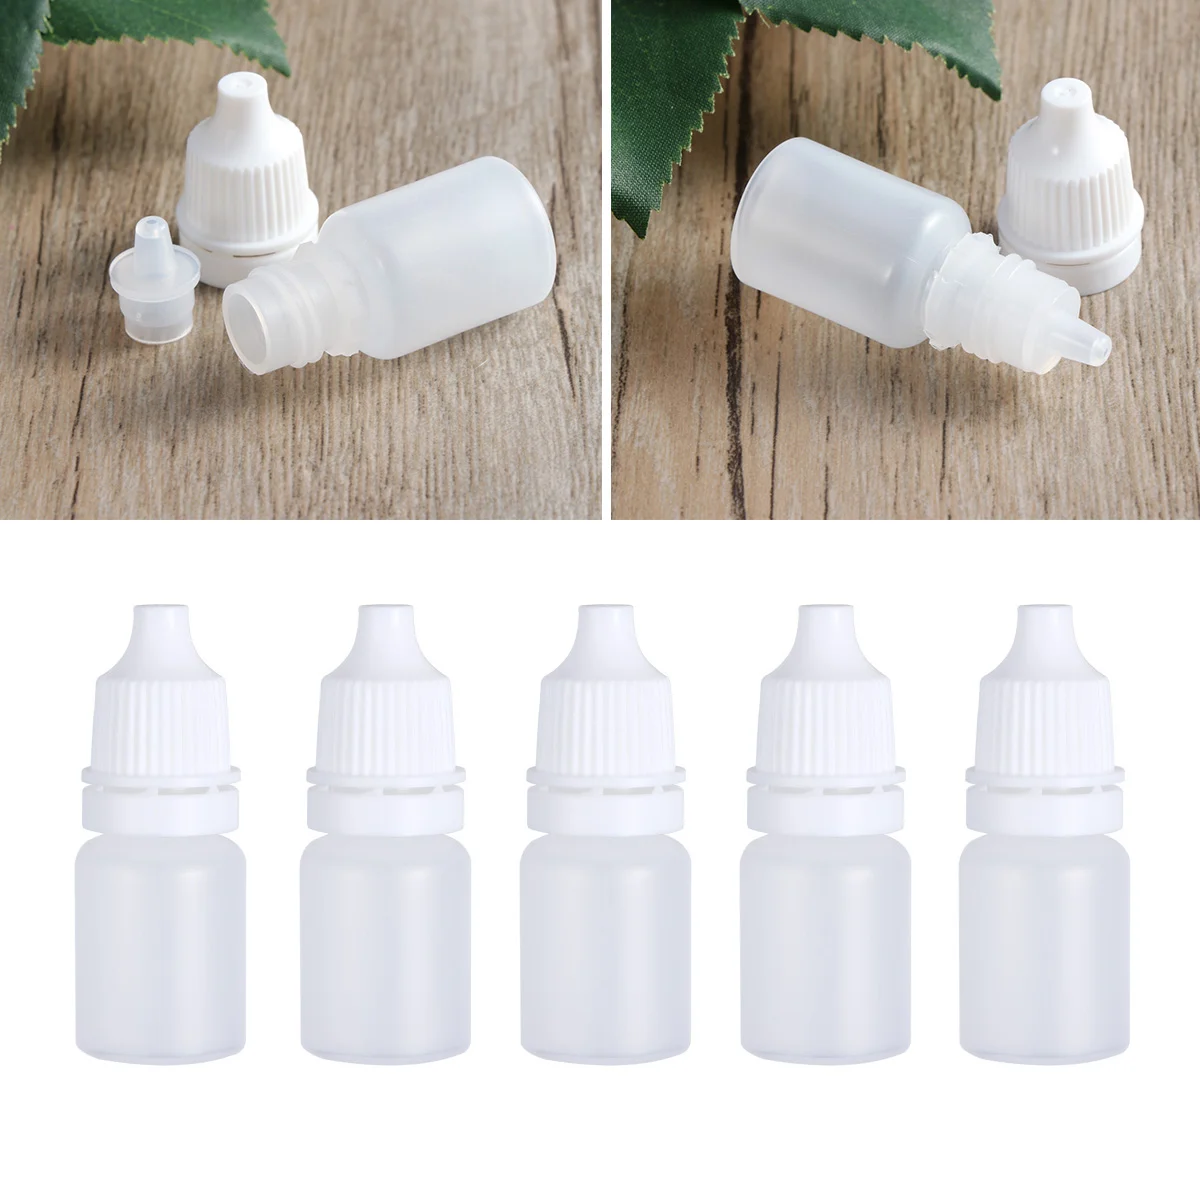 

30Pcs Squeezable Dropper Bottles 5ml Empty Eye Dropper Sample Essential Oil Container Makeup Vial